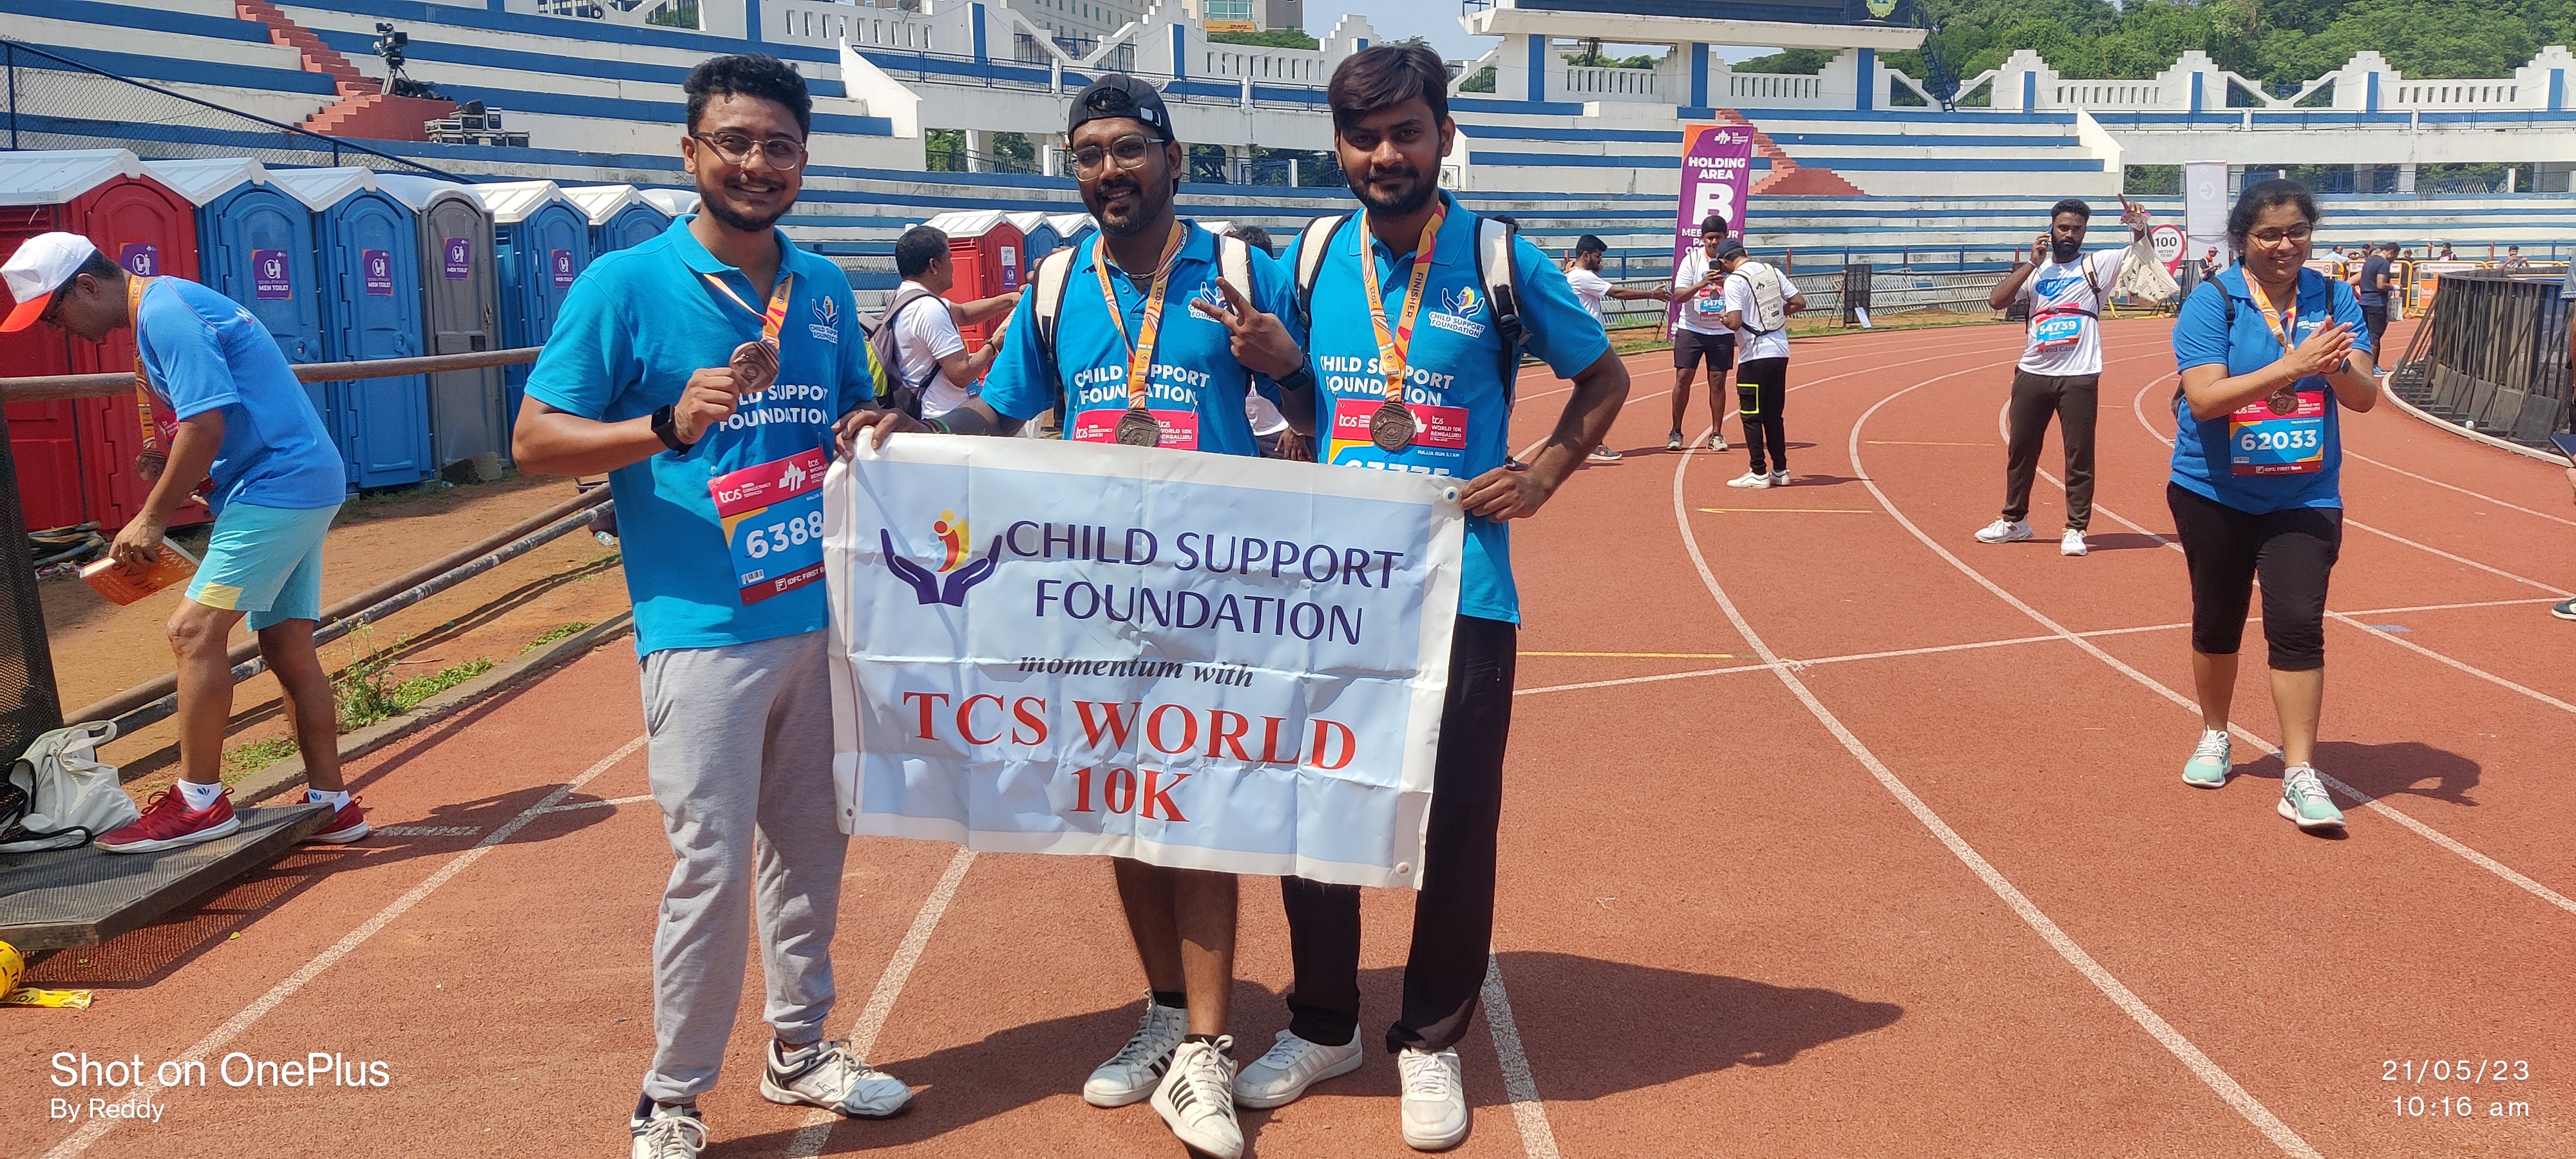 TCS World 10K marathon